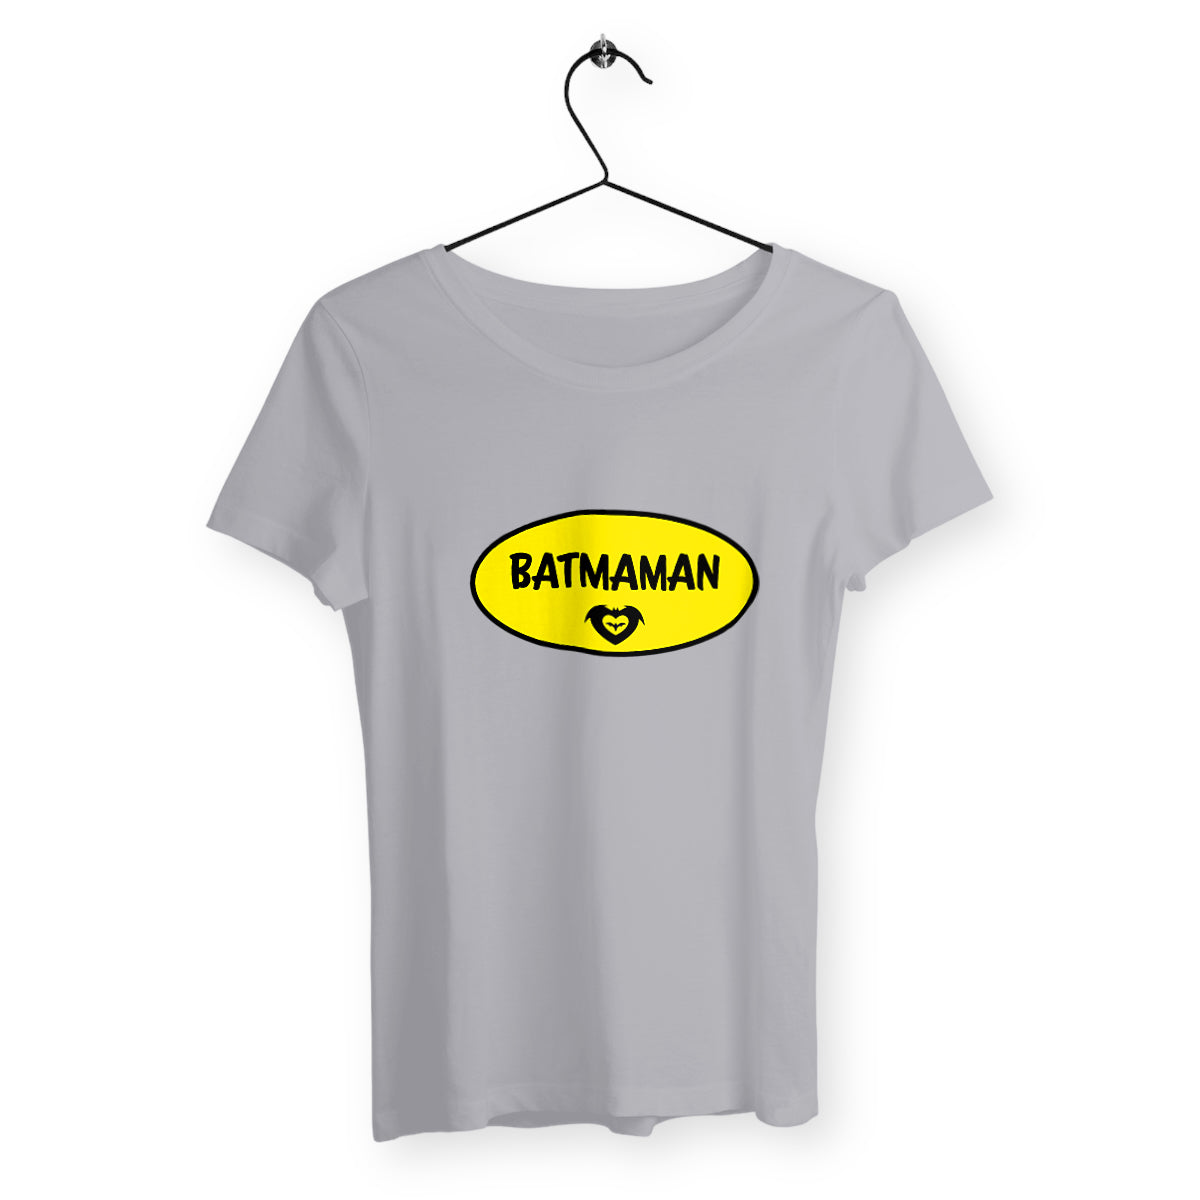 T-shirt batmaman